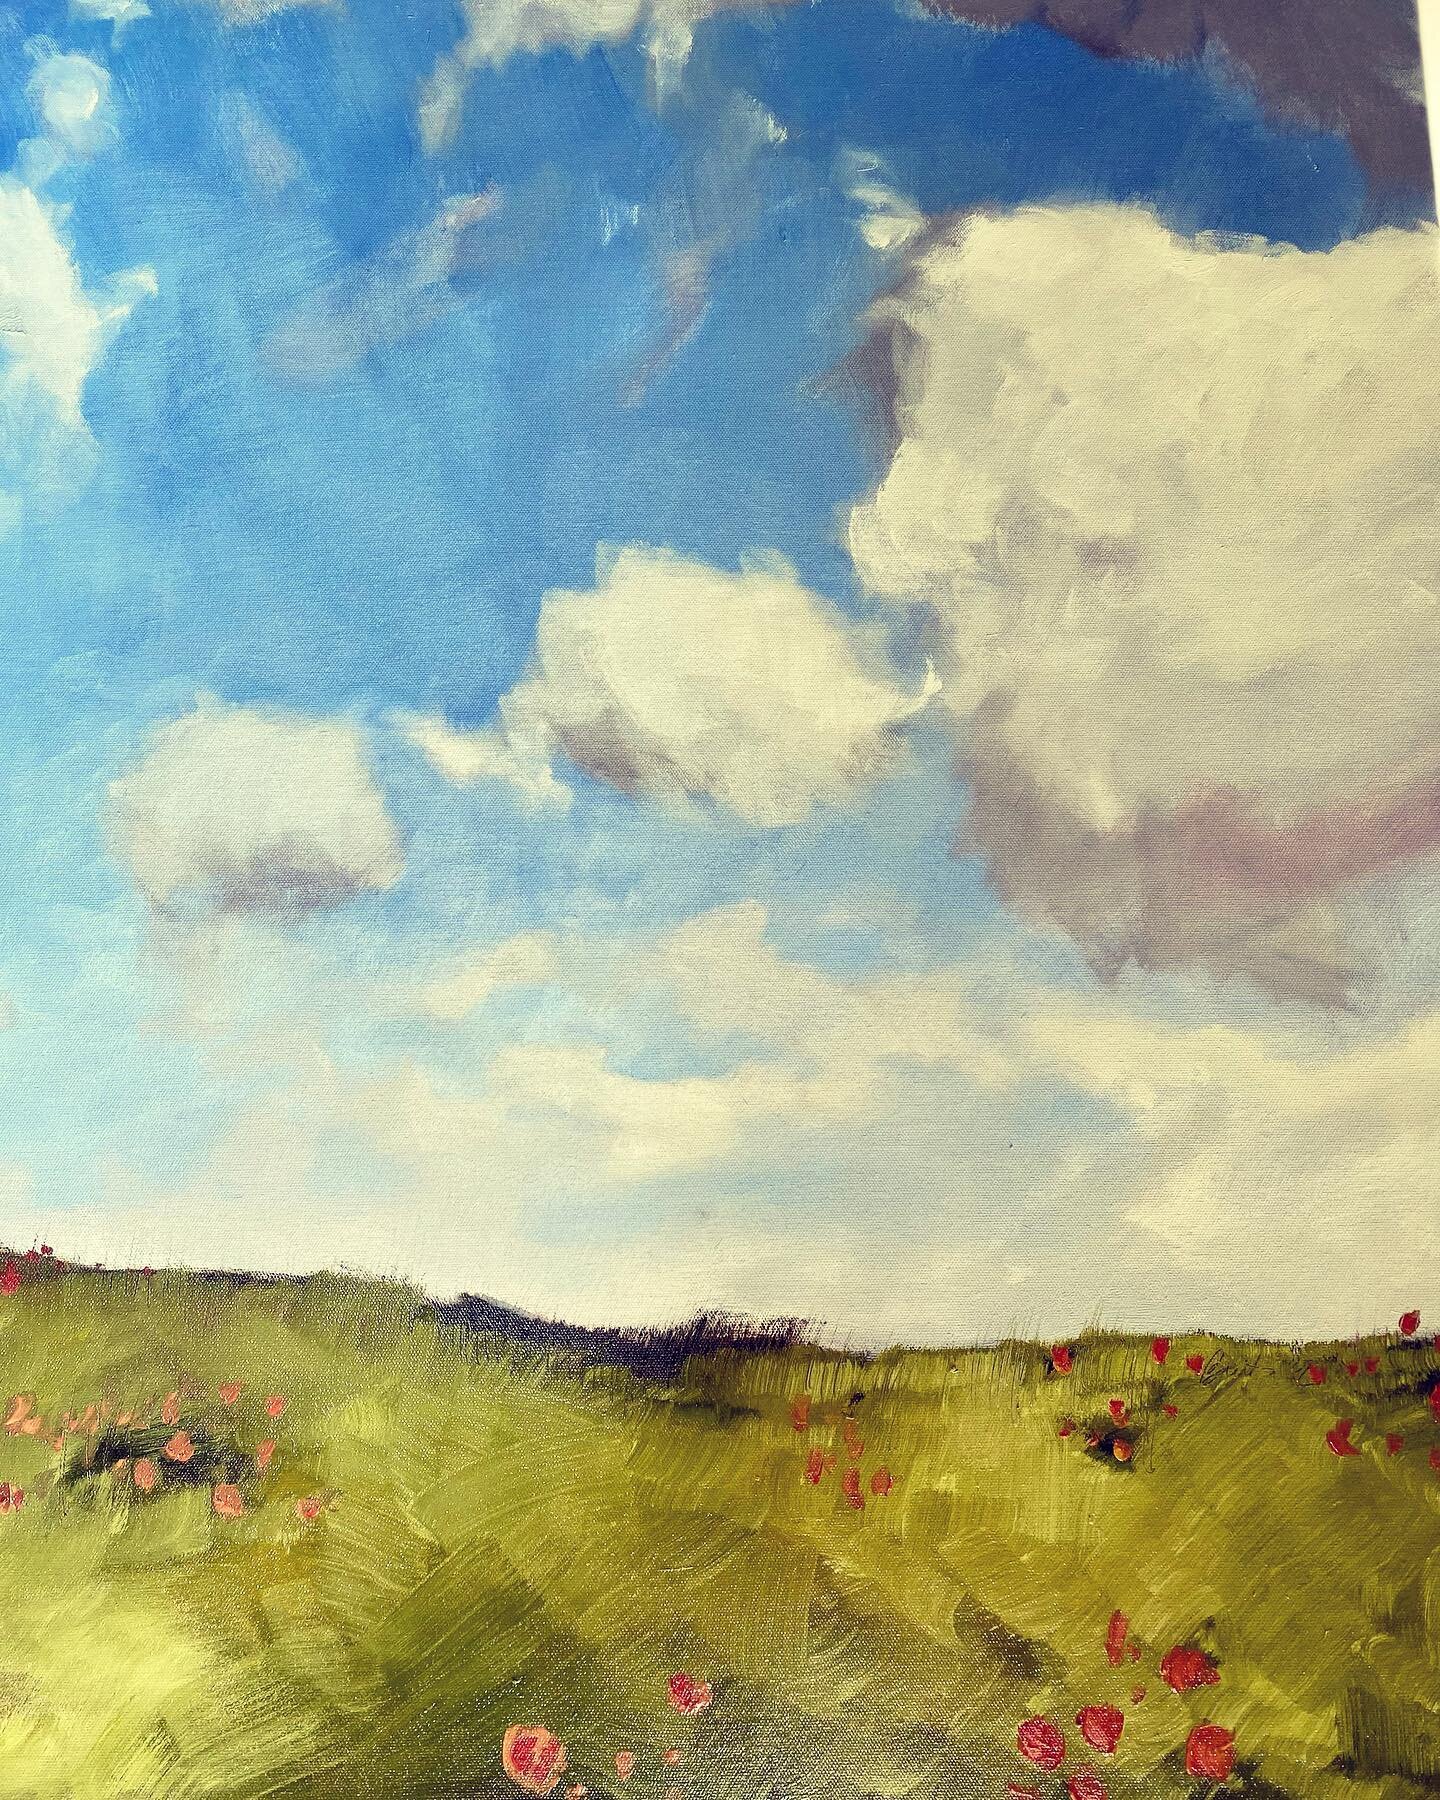 Commissions in progress&hellip; .
.
#artcommissions #studio #artstudio #oilpainting #abstractart #abstractlandscape #landscapeart #virginialandscape #cloudart #clouds #art #artist #etsyartist